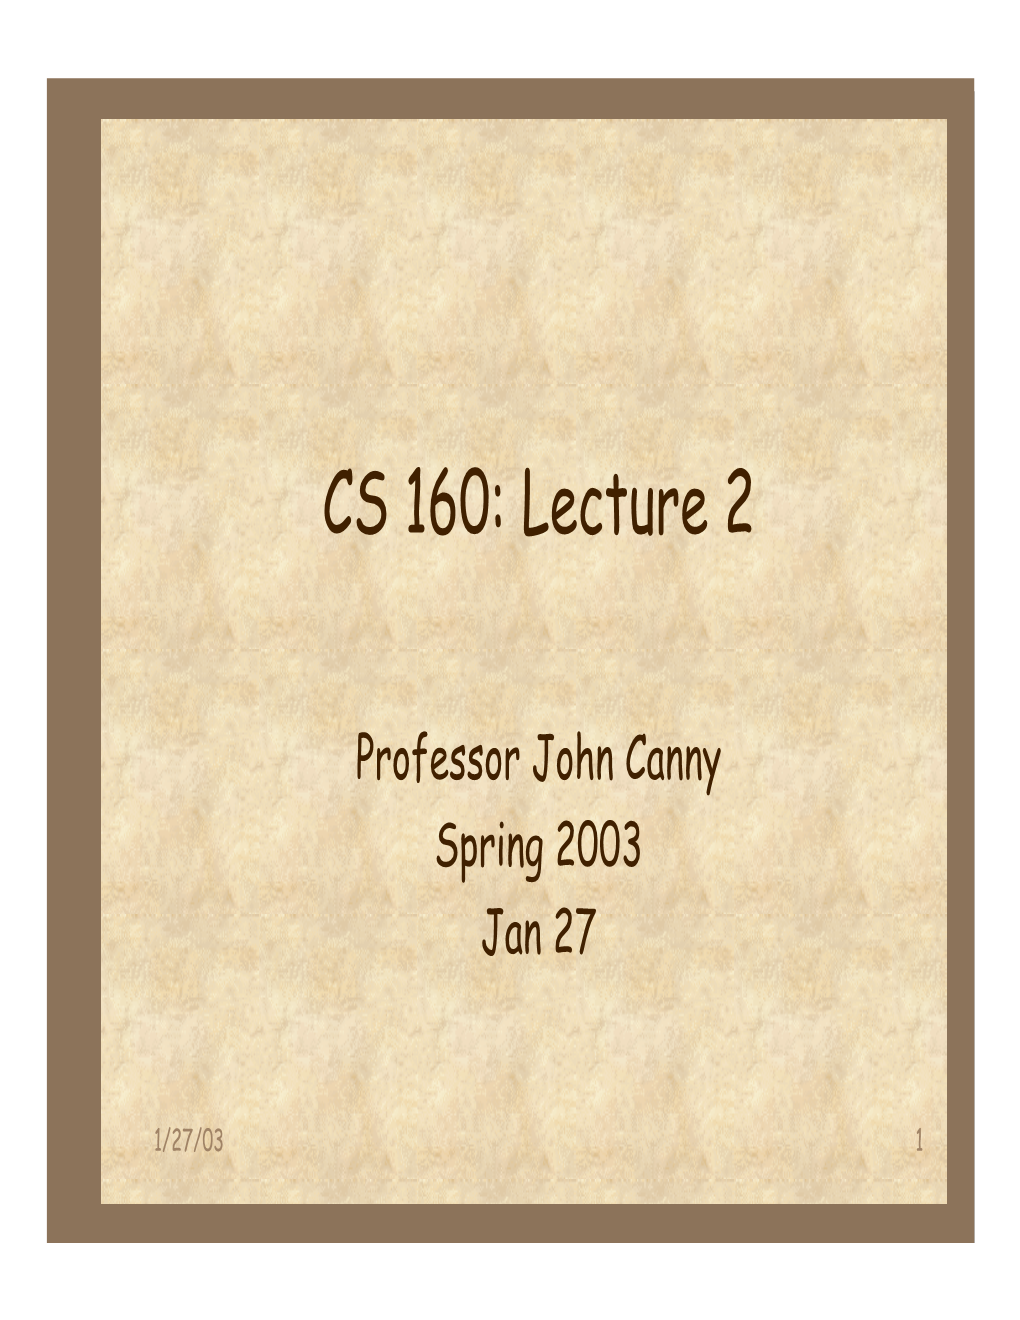 CS 160: Lecture 2